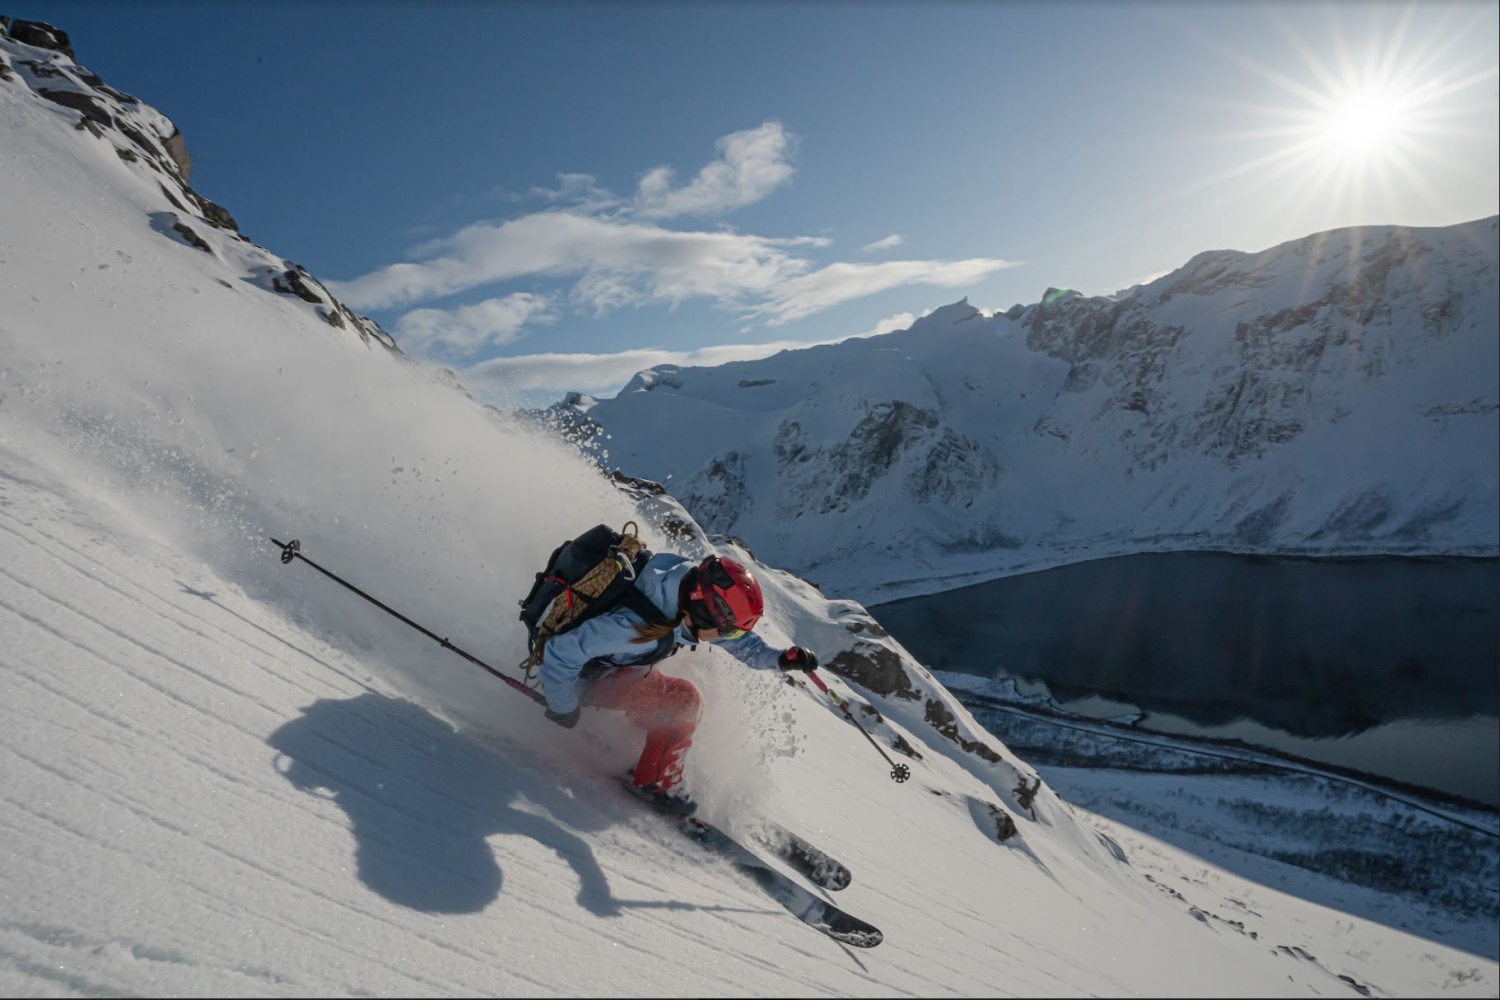 Full speed down the mountainside on skiis